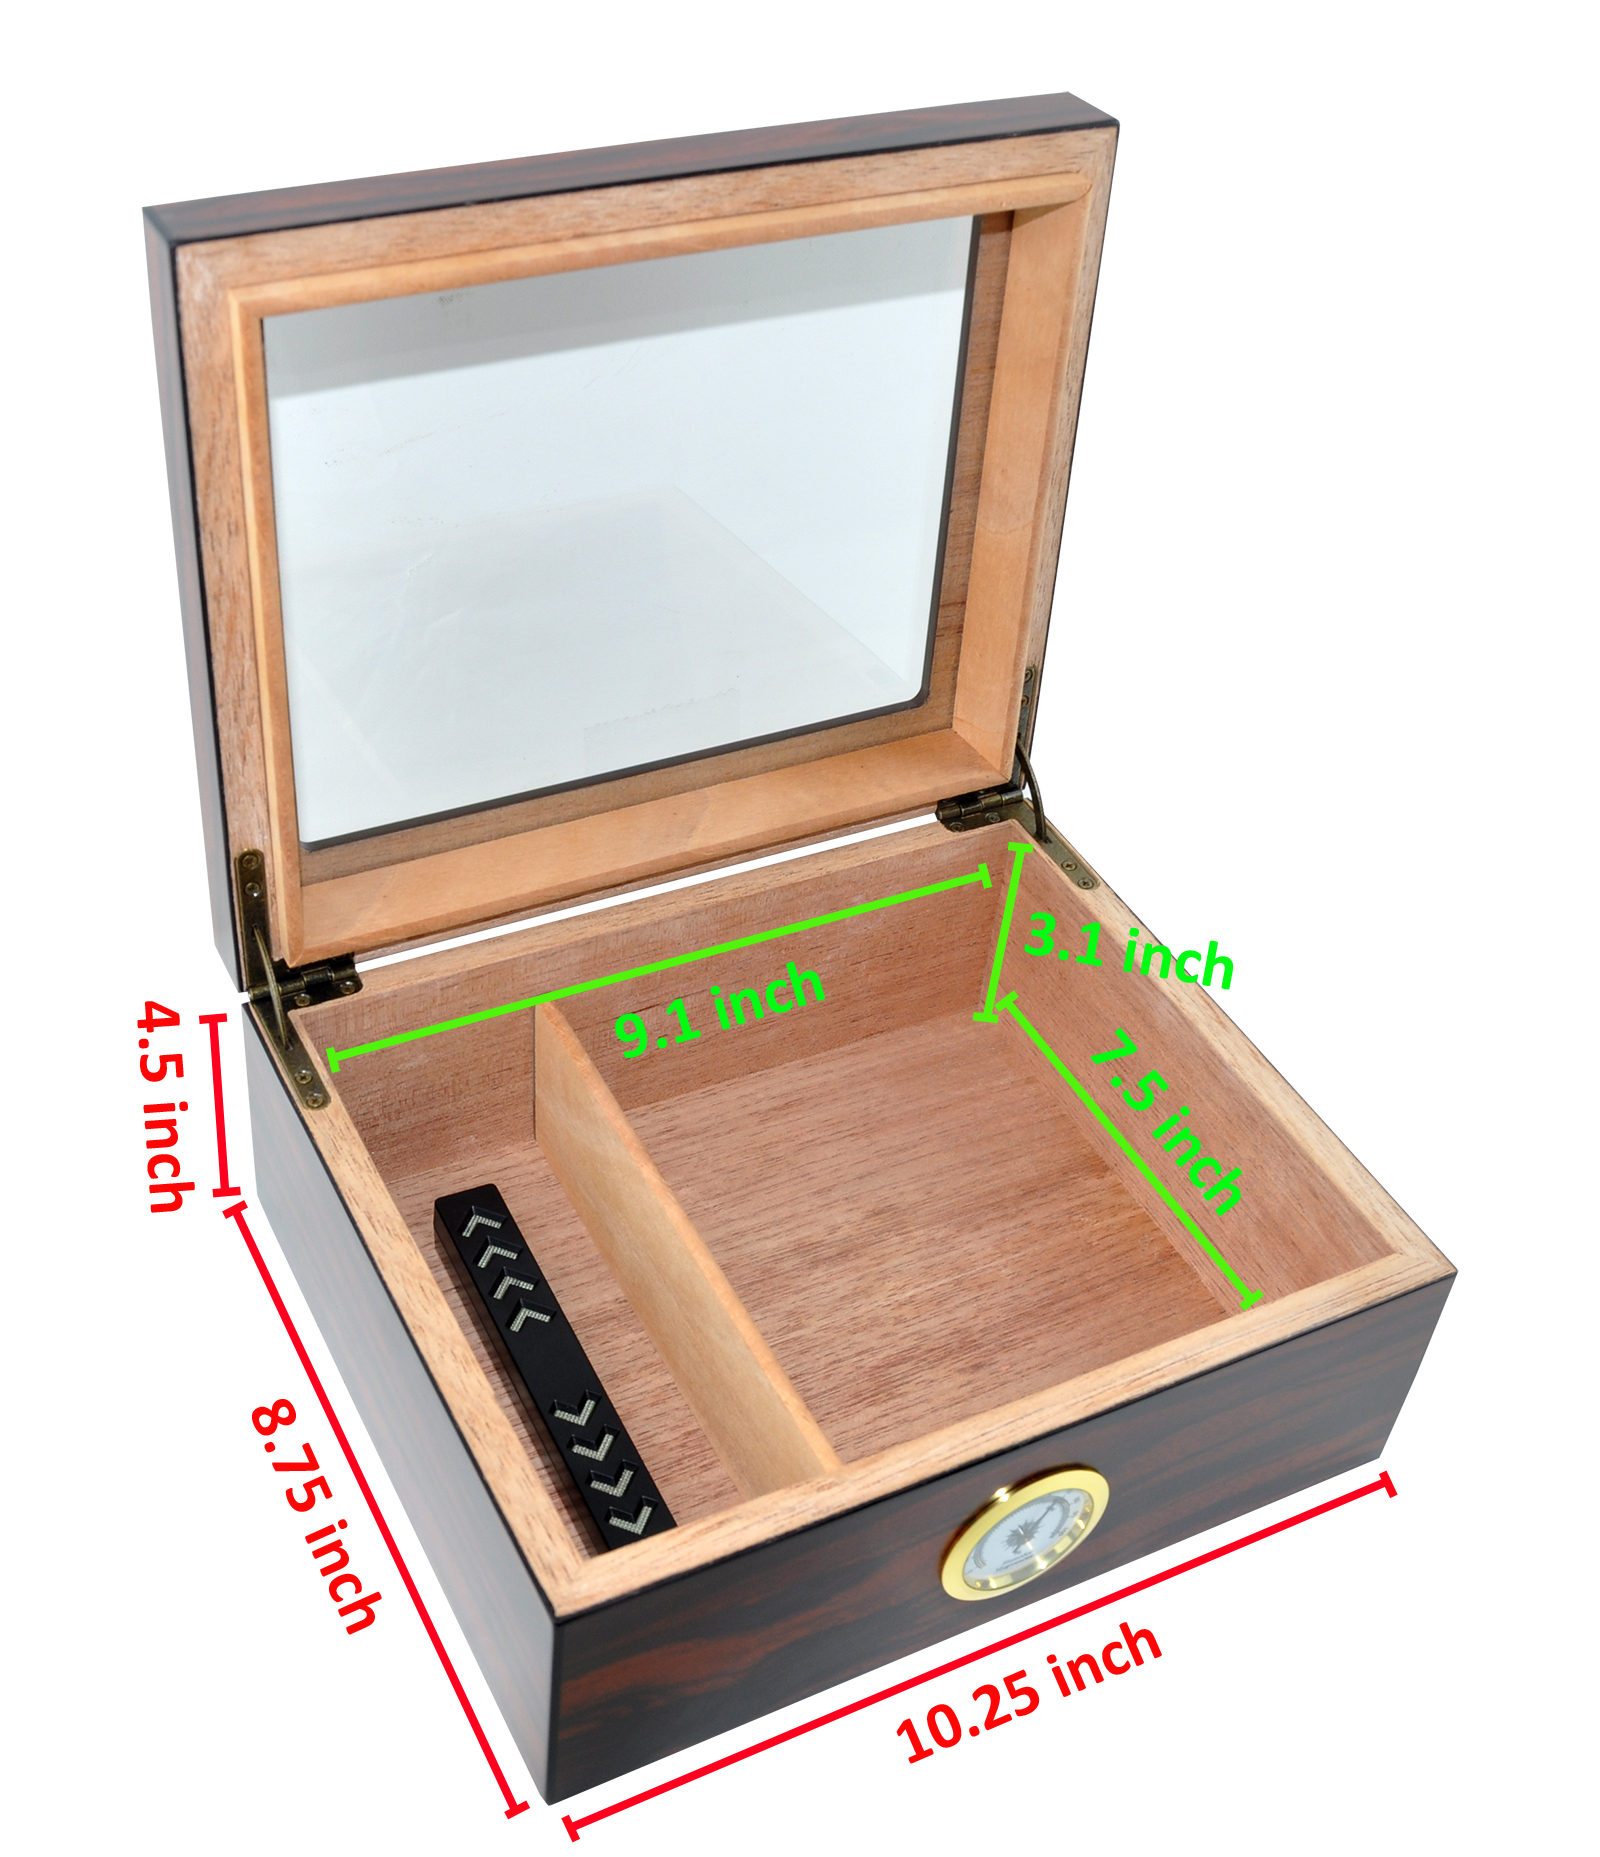 DUCIHBA Humidor Box - Holds 25-50 Cigars - Tempered Glass Display - Spanish Cedar Wood - Brown Color - image 5 of 7